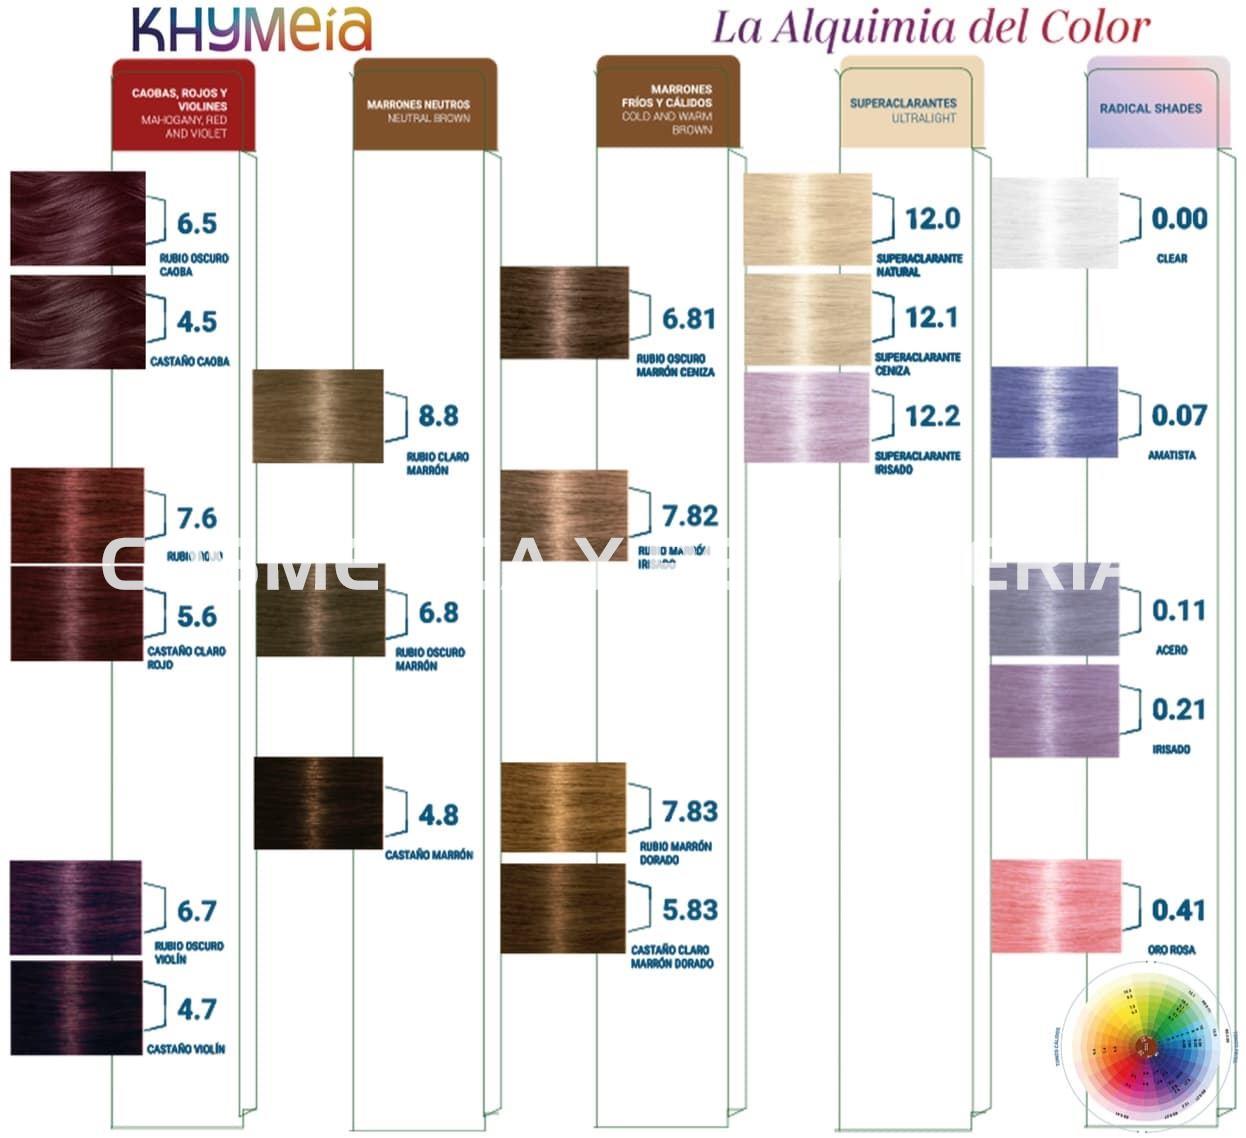 Tinte Khymeía color 5.6 - Imagen 2